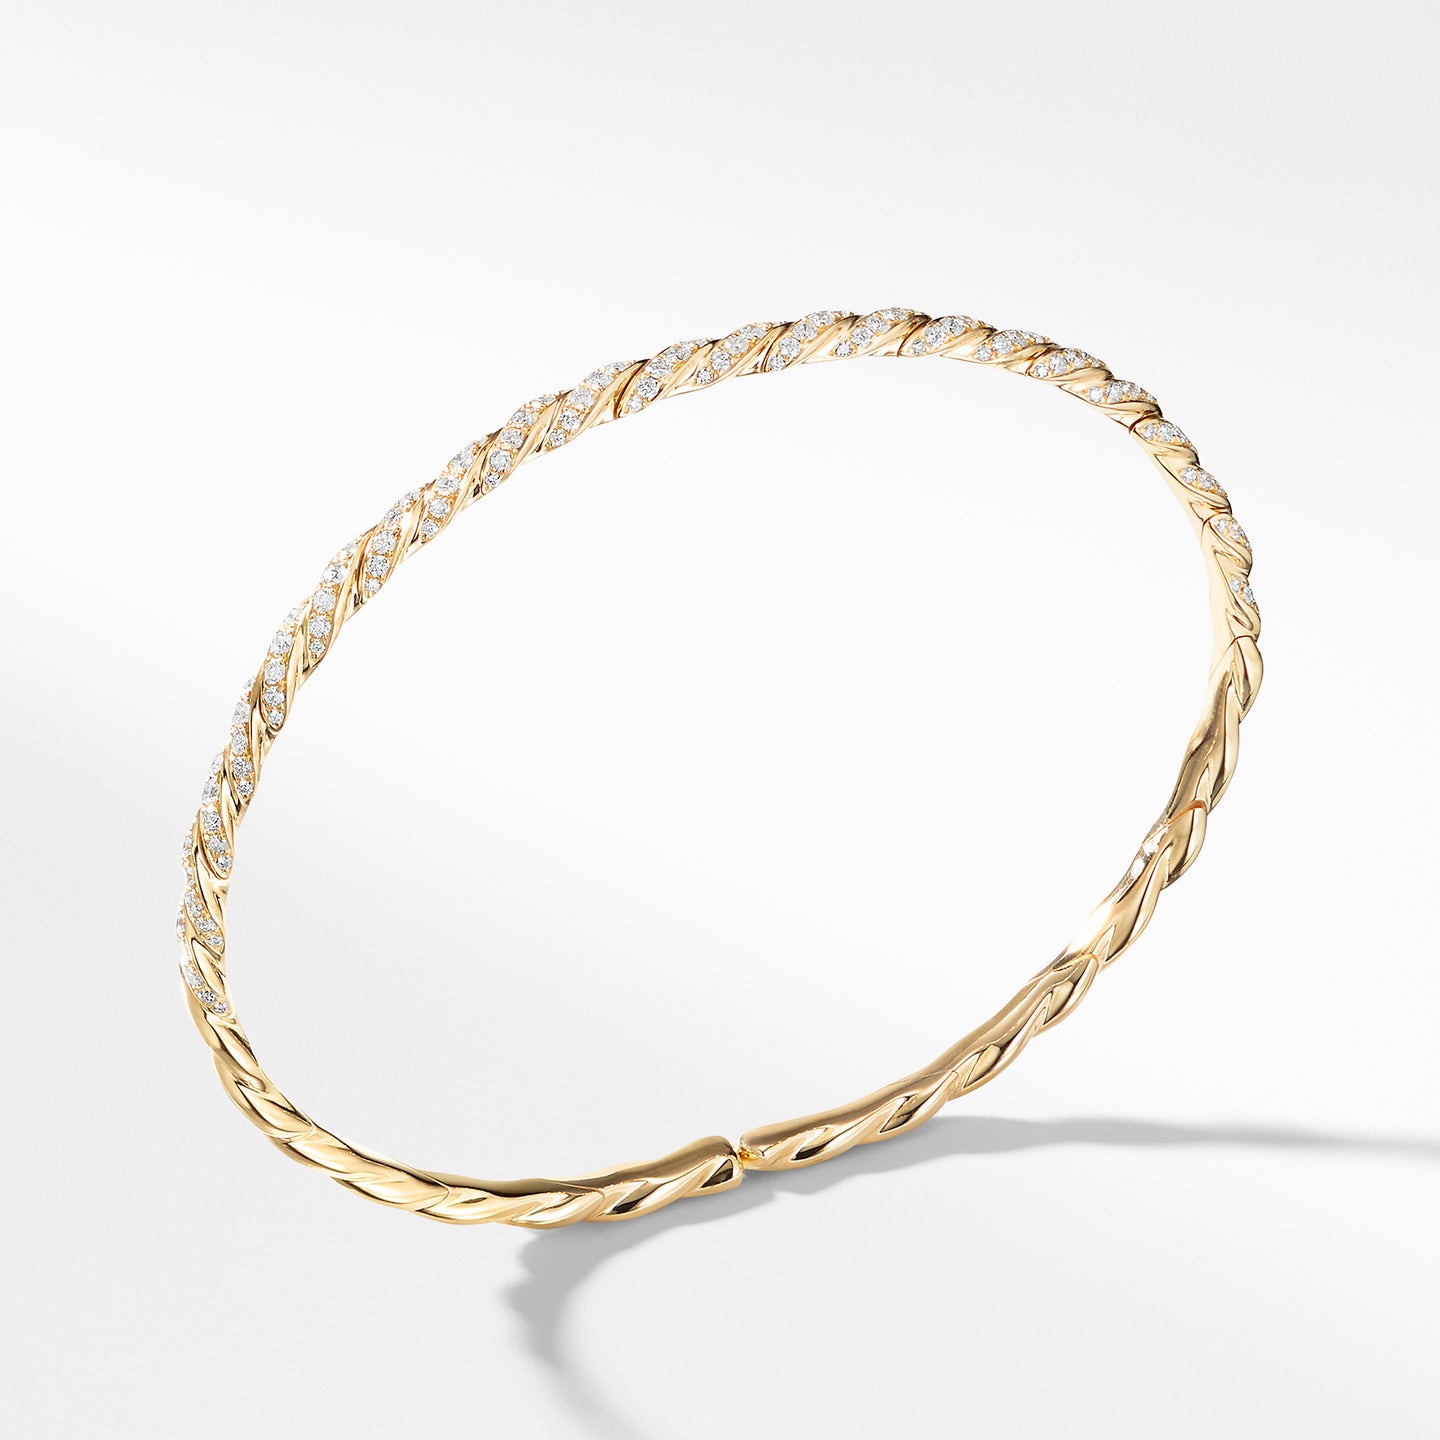 Pavéflex Single Row Bracelet with Diamonds in 18K Gold, Size Medium